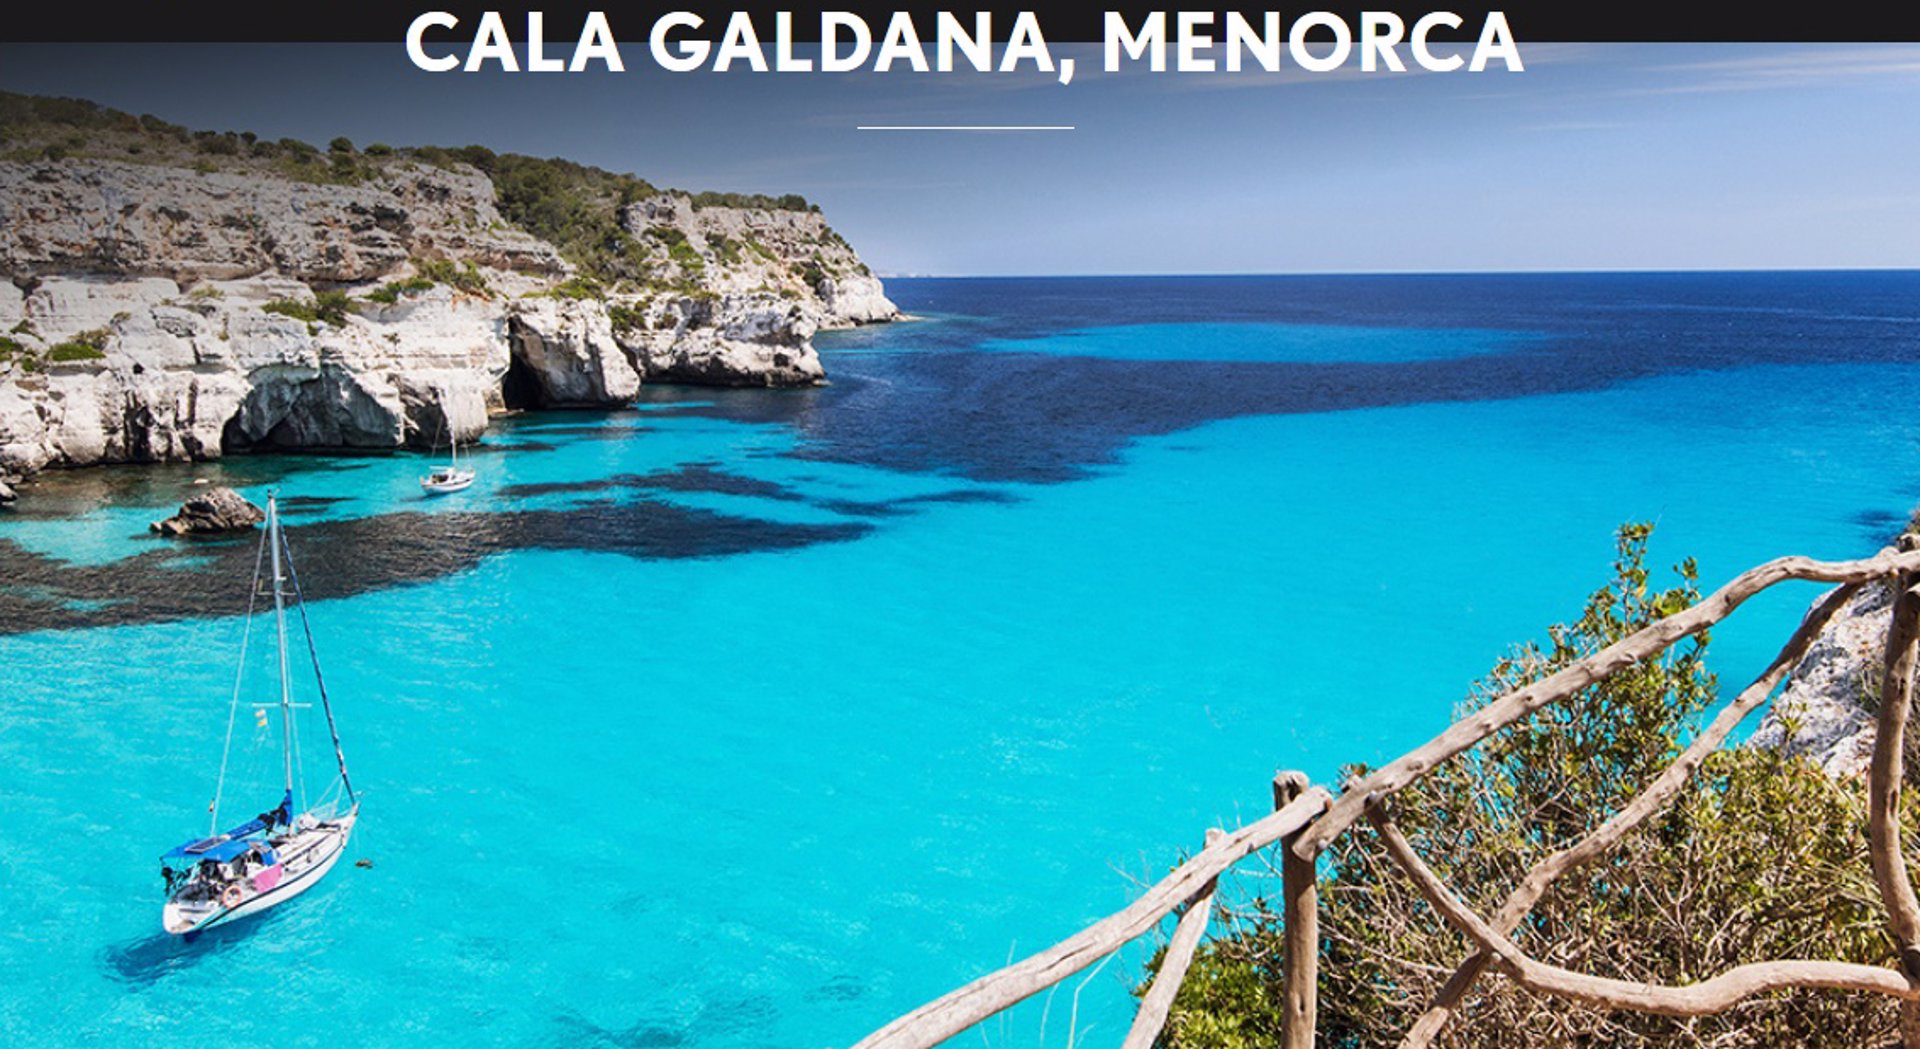 Cala Galdana, en Menorca